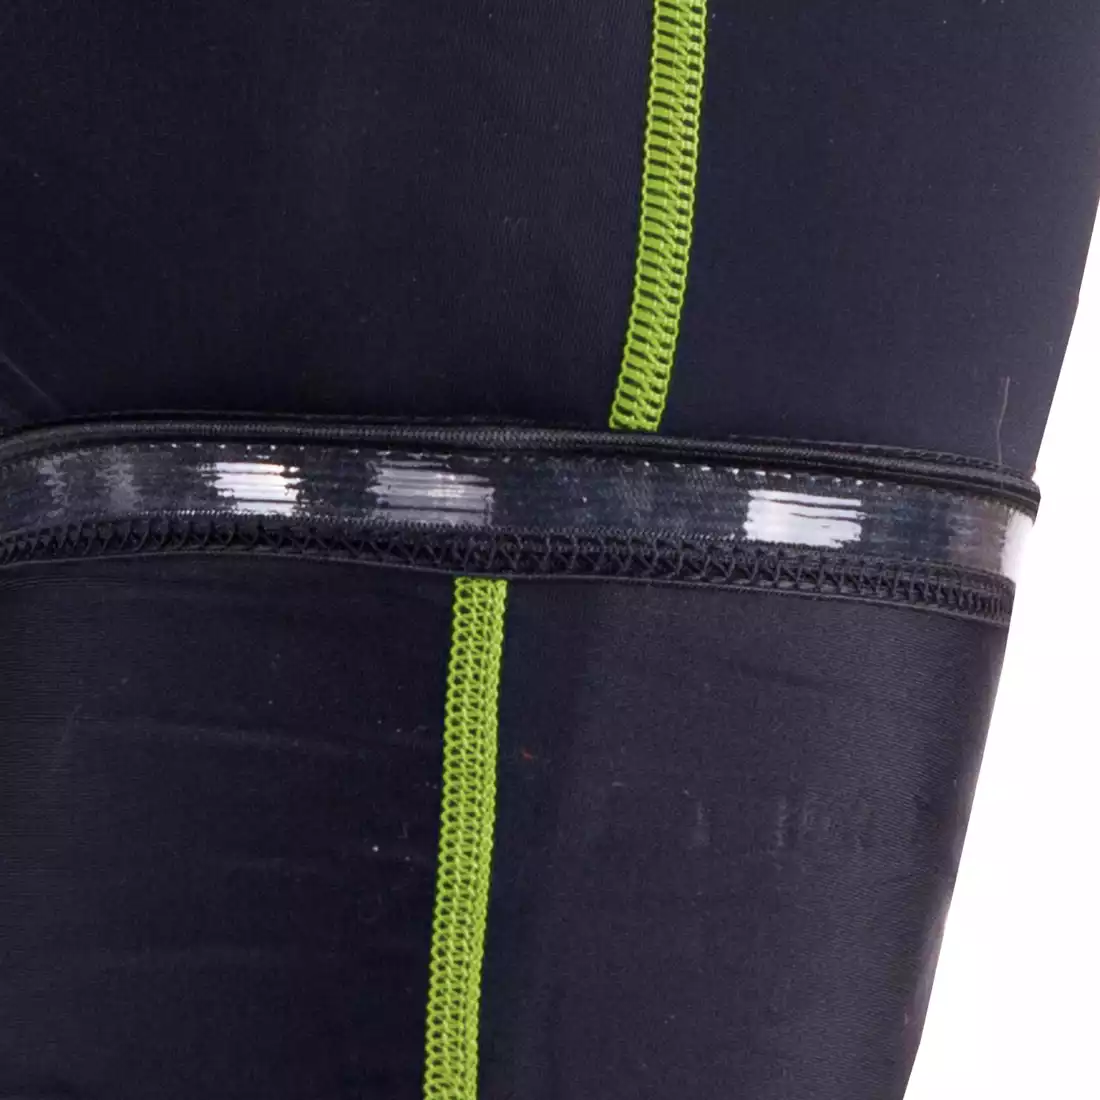 DEKO POCKET men's cycling shorts, black-fluor